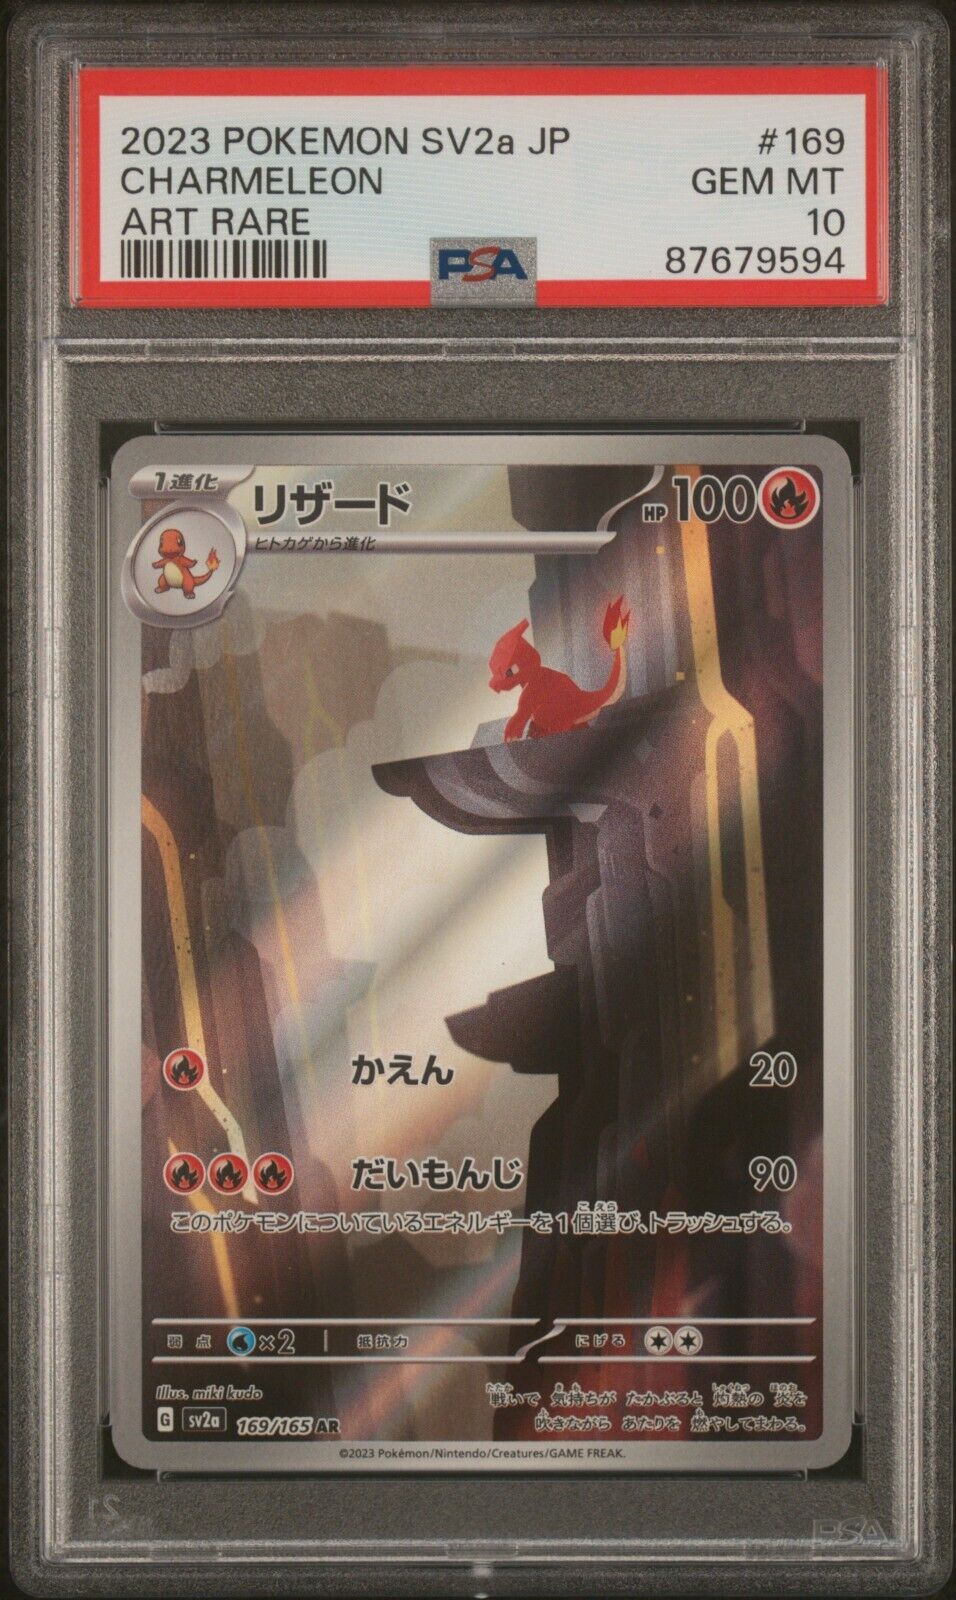 2023 Pokemon 151 Japanese sv2a AR Charmeleon #169/165 GEM MINT PSA 10